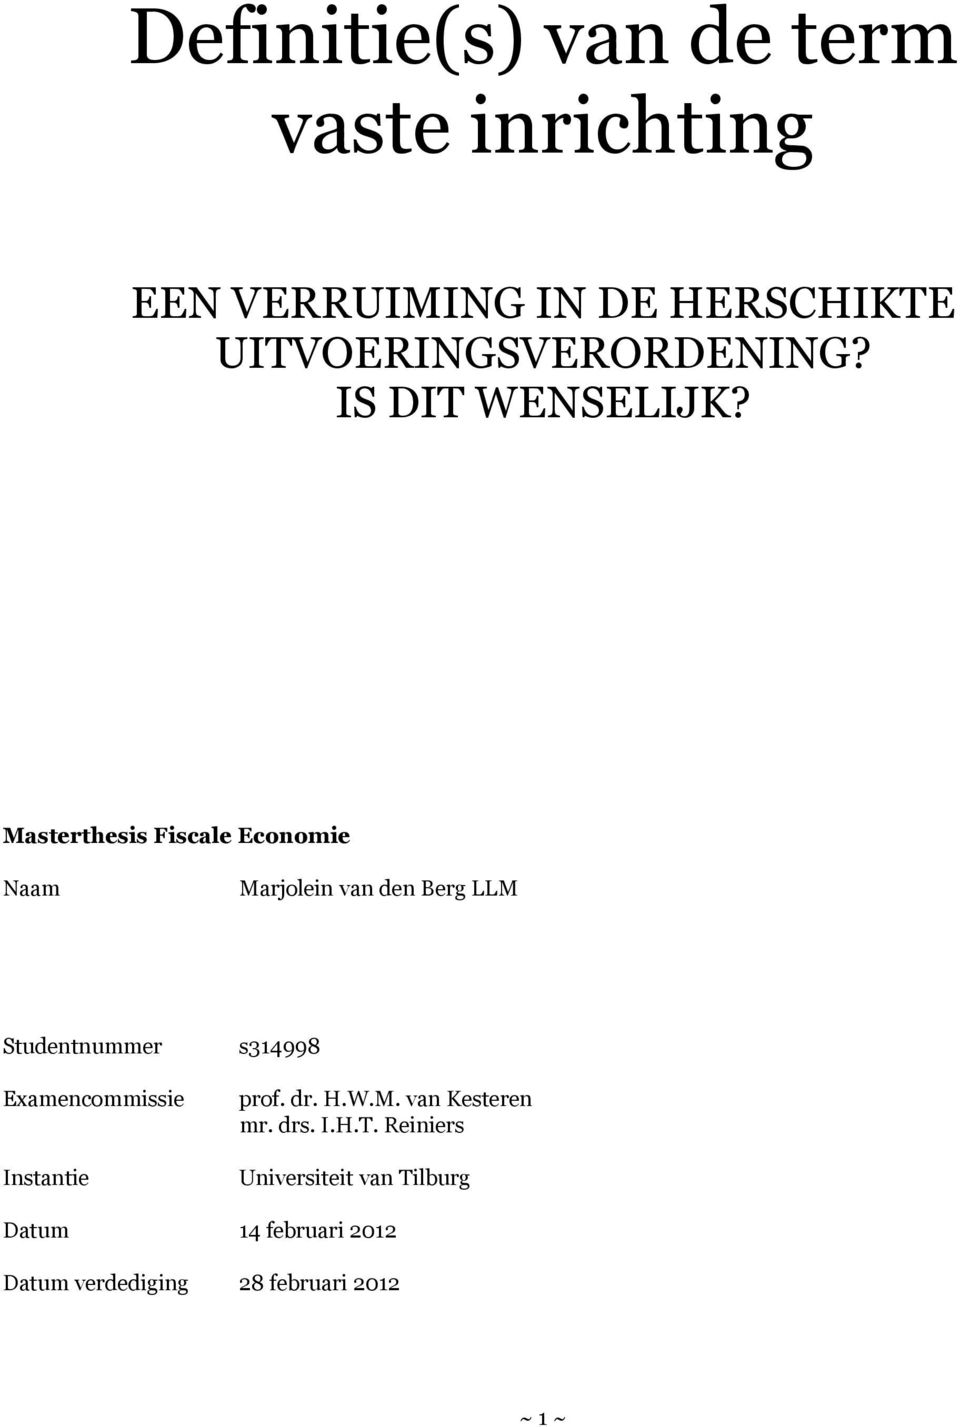 Masterthesis Fiscale Economie Naam Adres Marjolein van den Berg LLM Picushof 192, 5613 SE Eindhoven